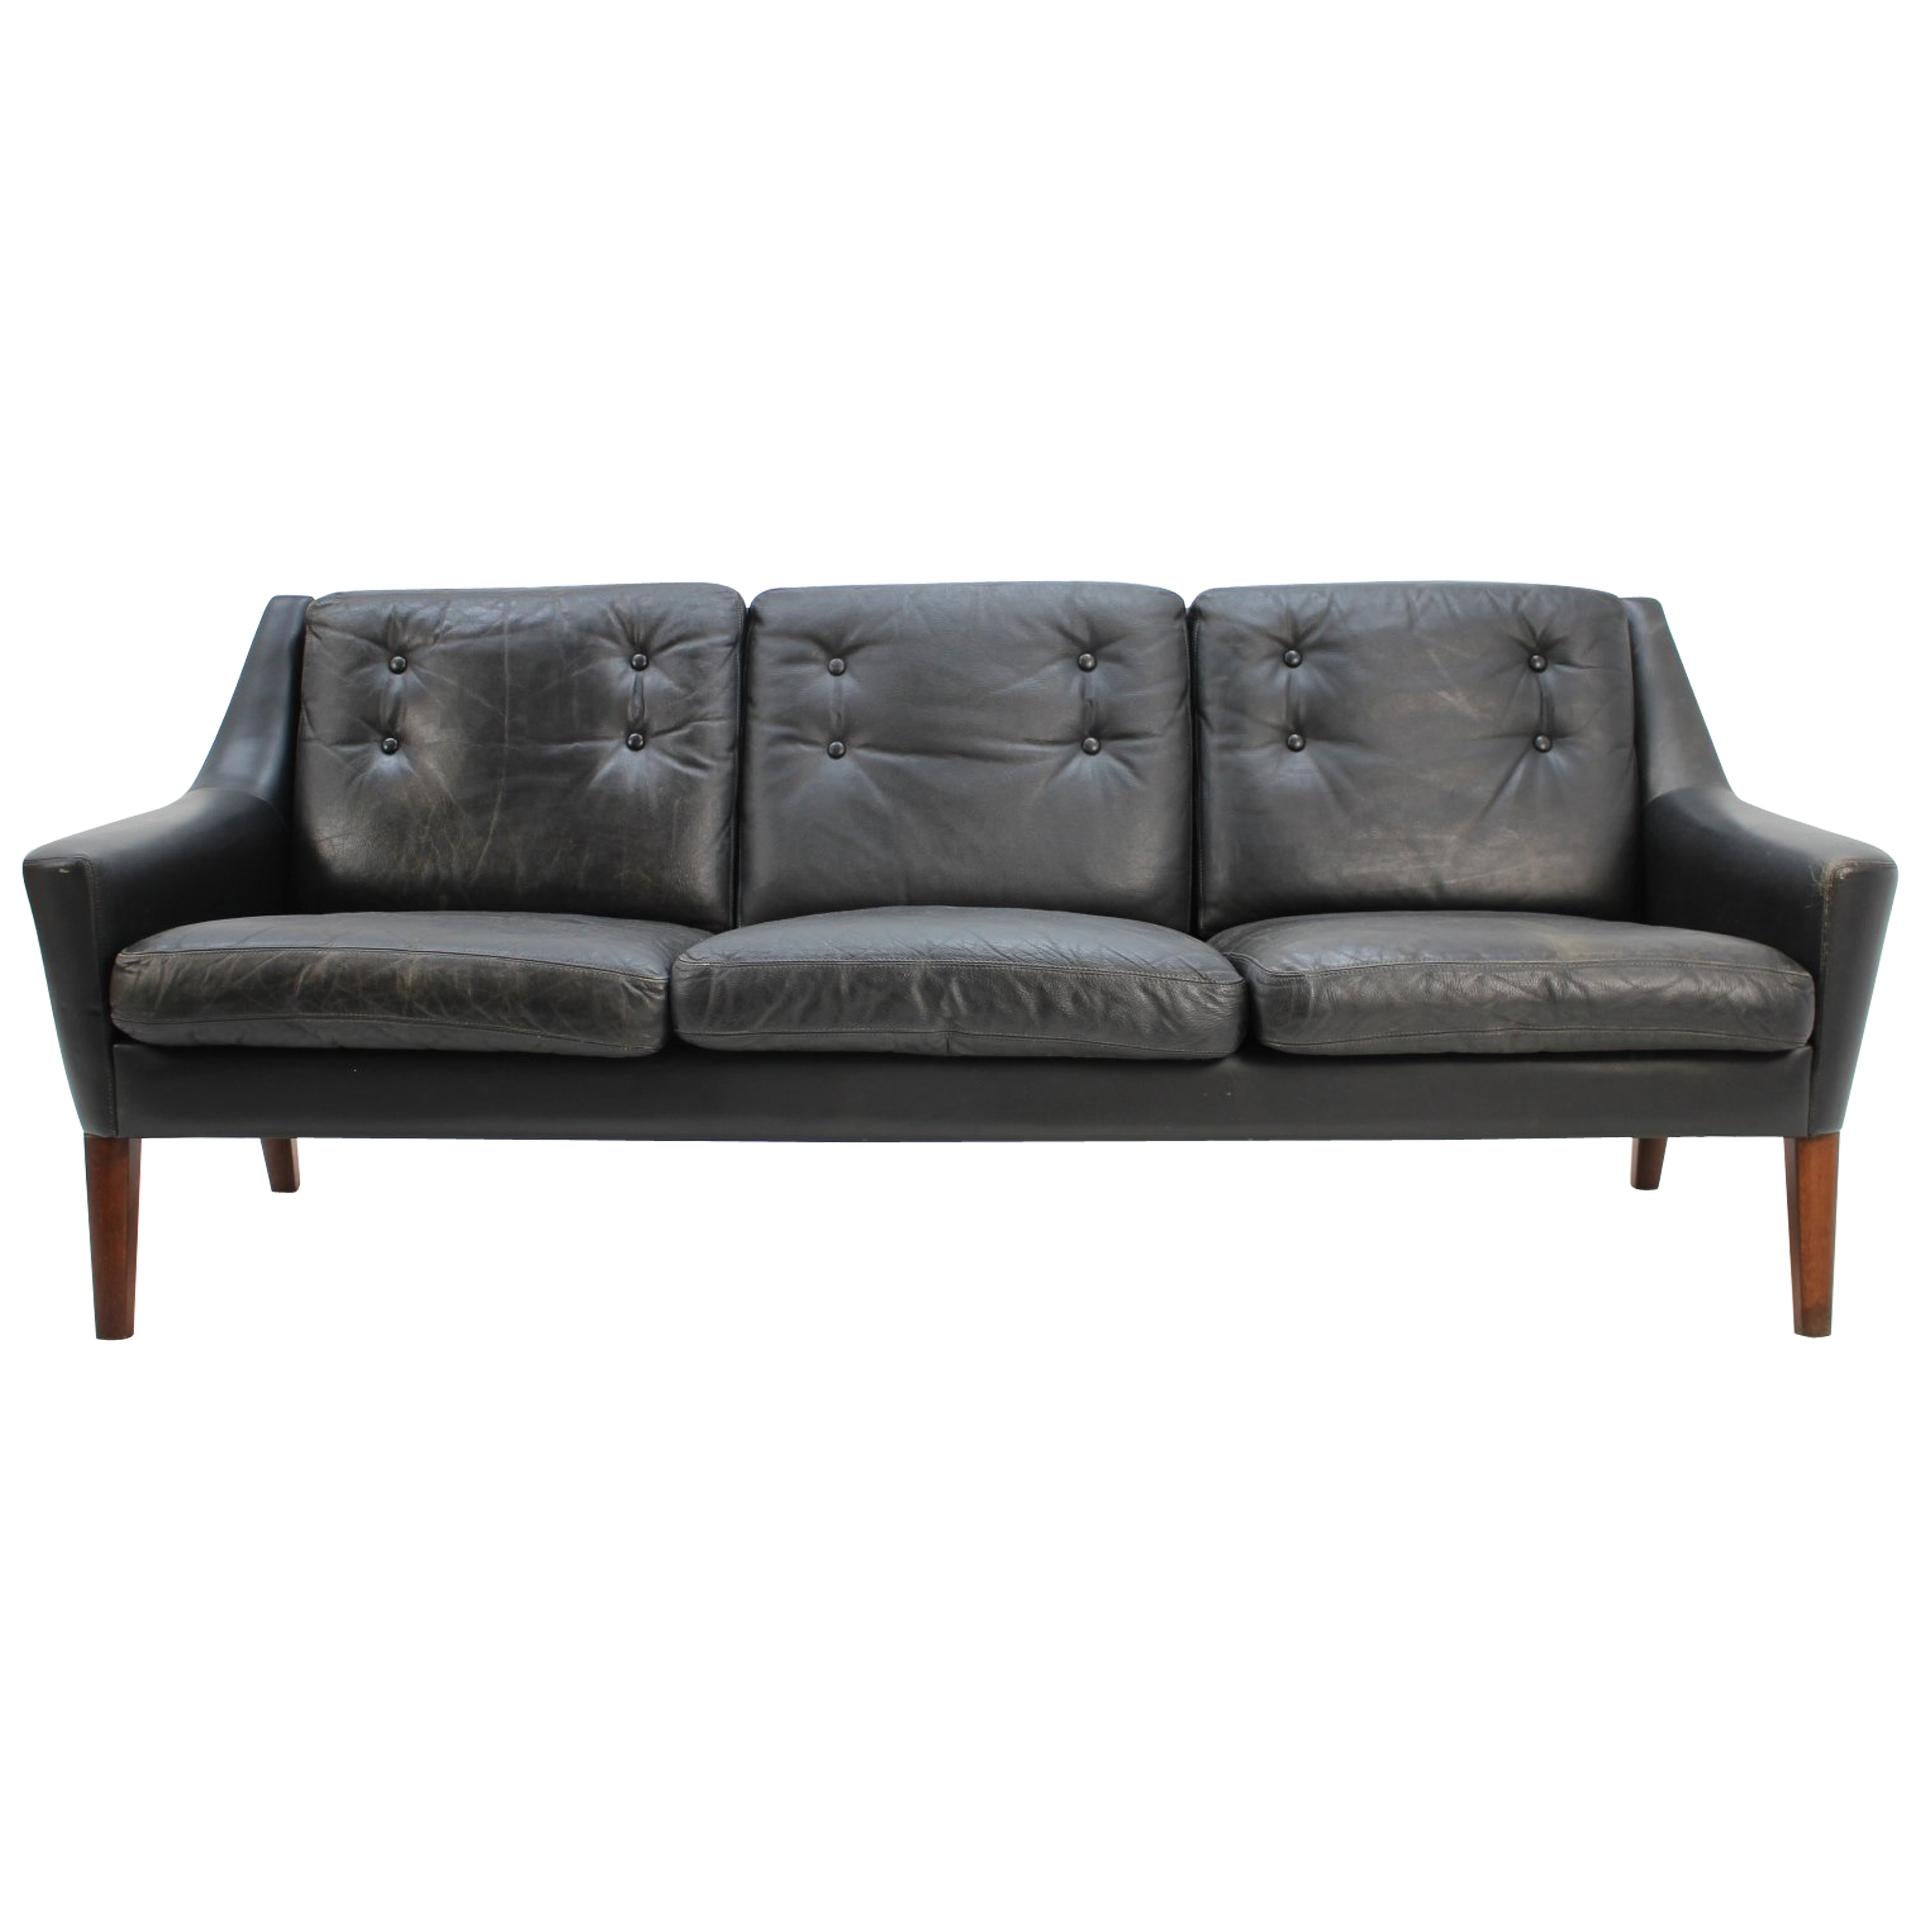 1960s Scandinavian Three-Seat Sofa in Black Leather